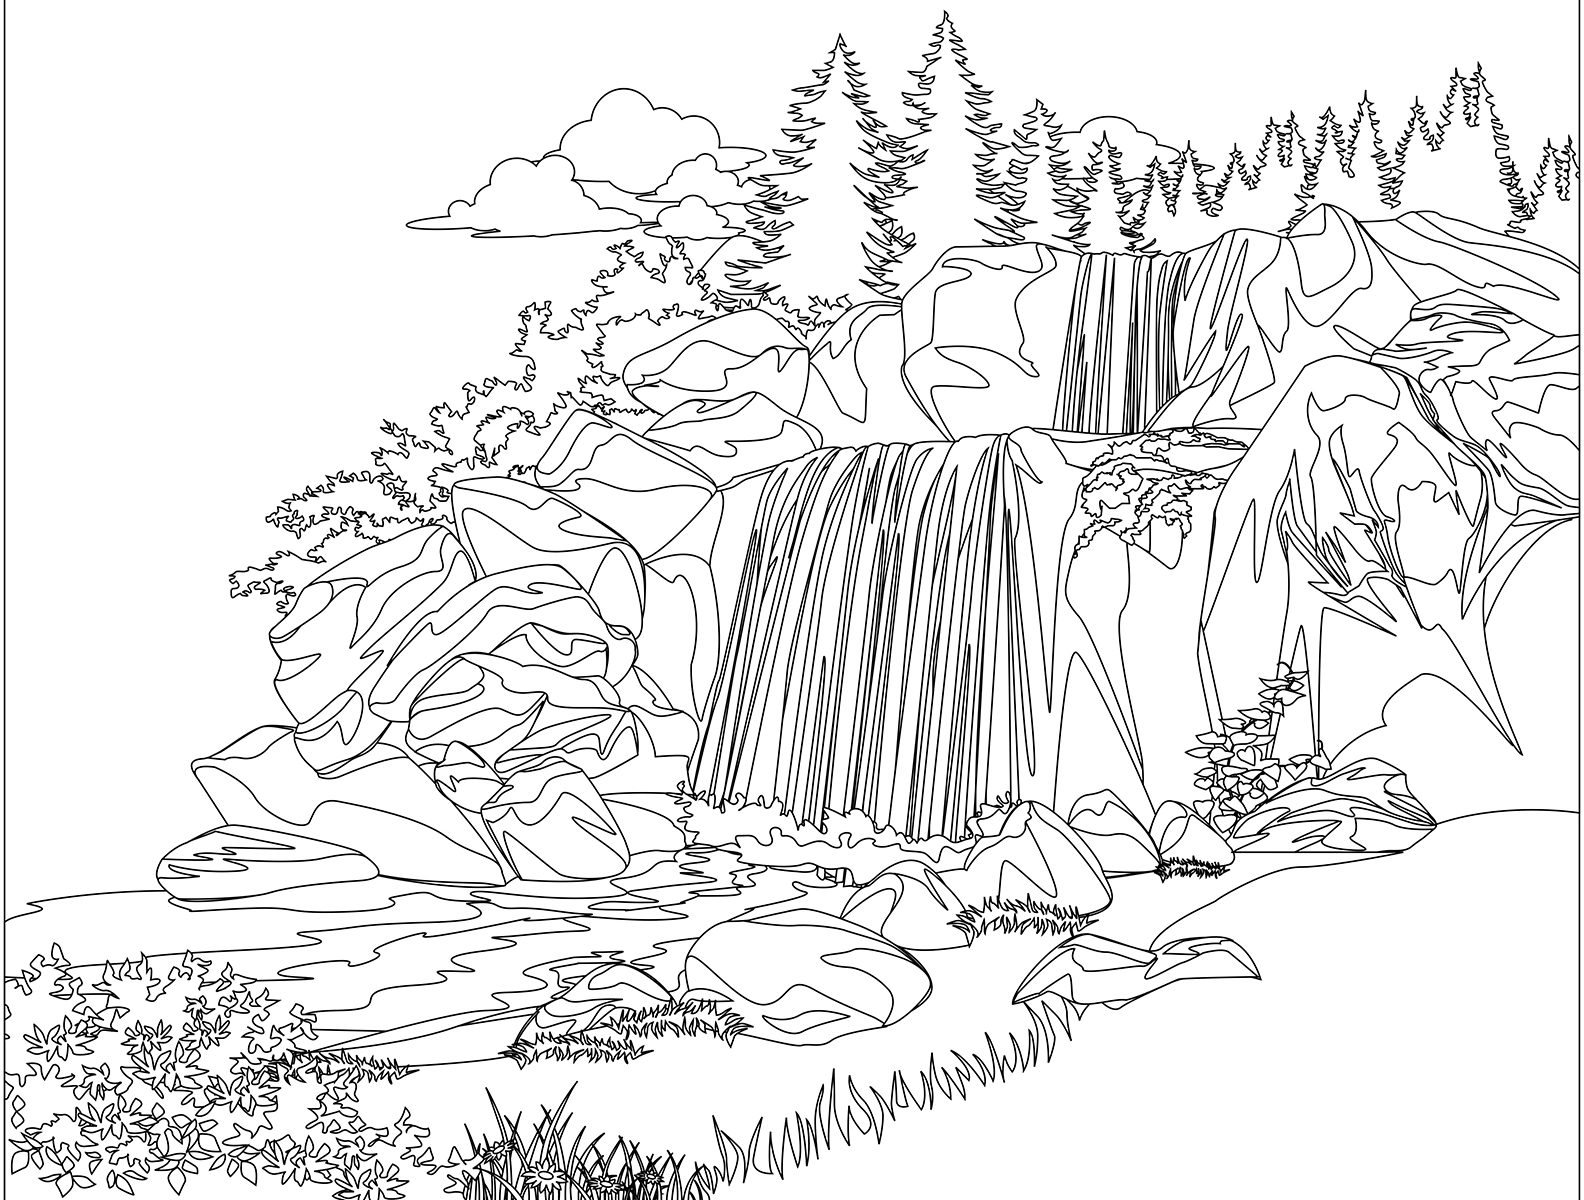 Coloring Page Waterfall at GetColorings.com | Free printable colorings